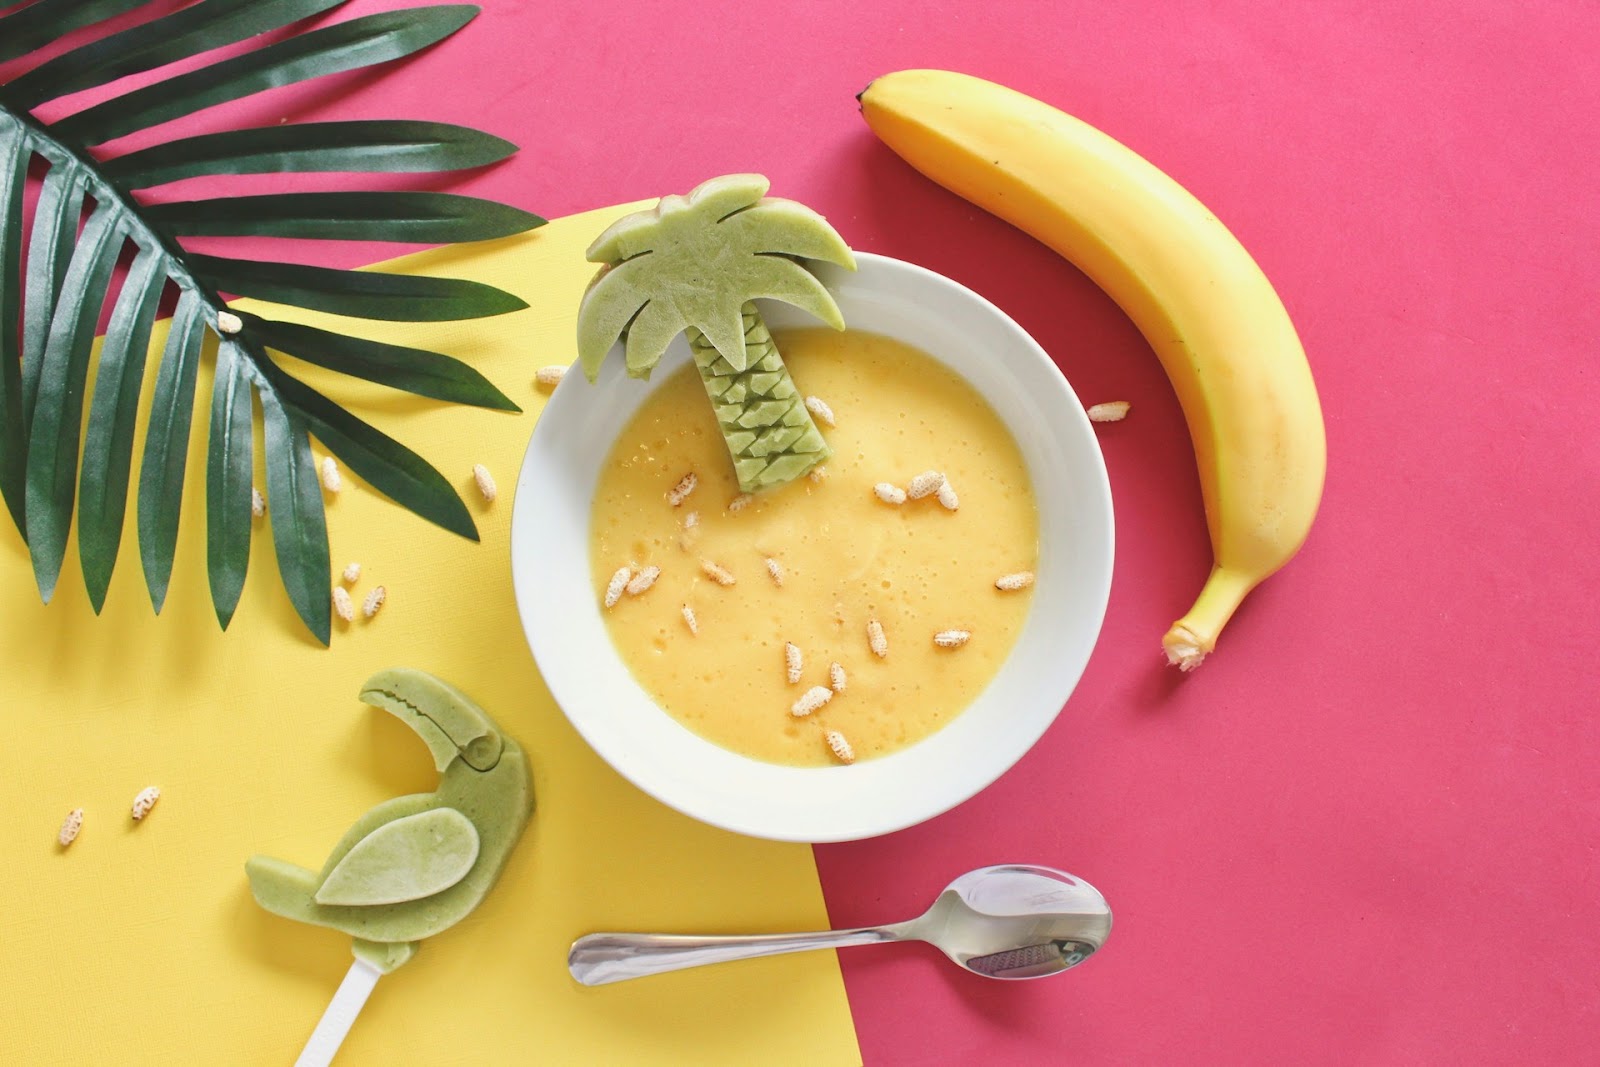 calories in a banana - a bowl of banana dessert